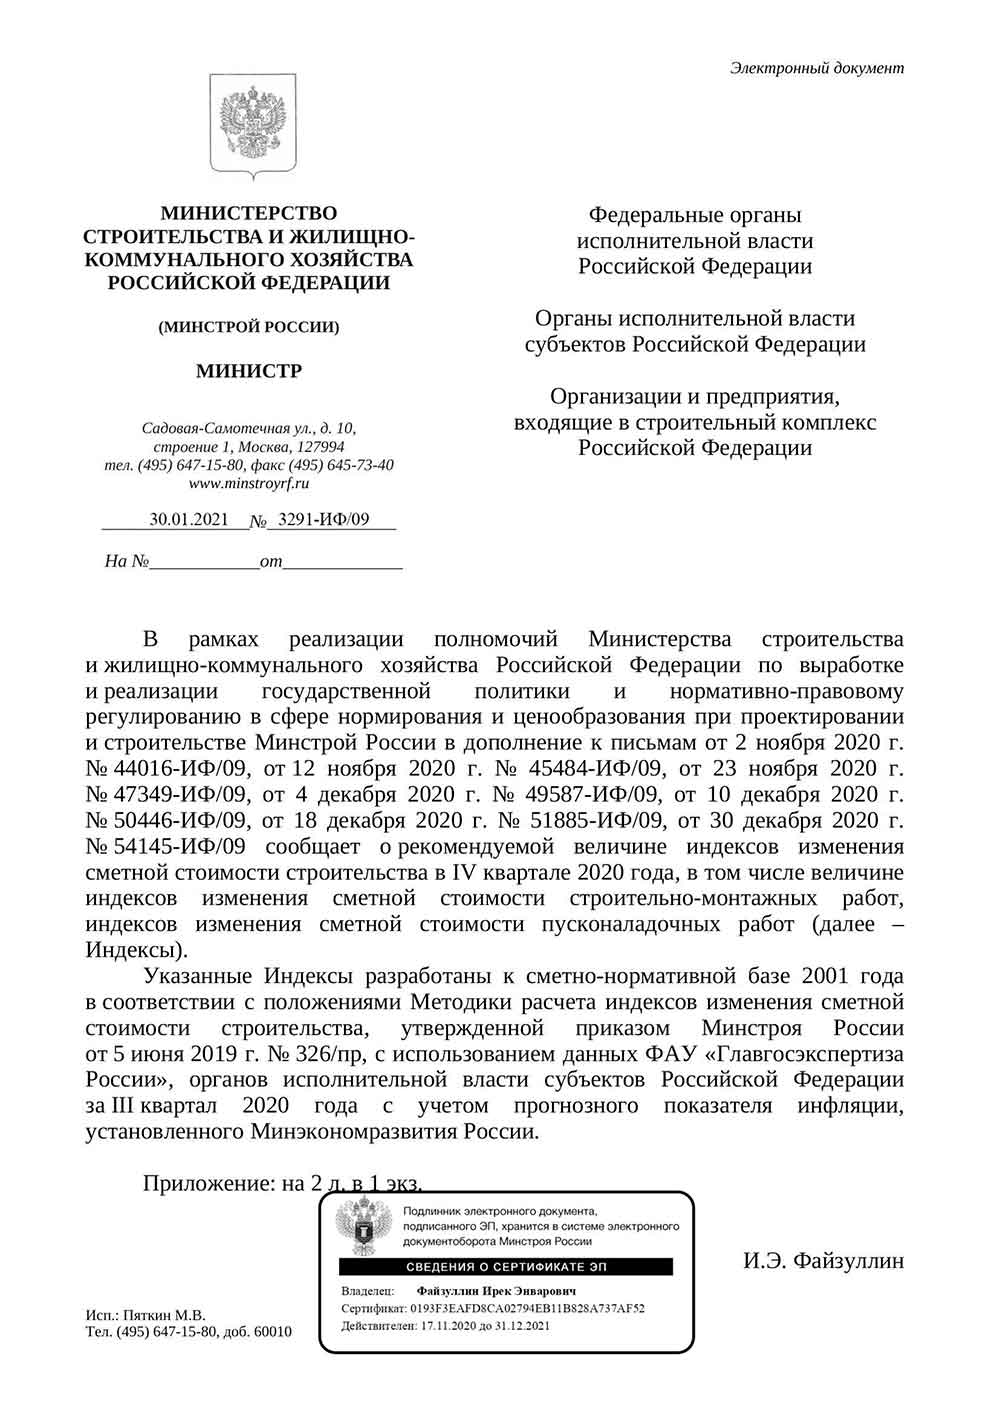 Письмо Минстроя РФ №3291-ИФ/09 от 30.01.2021 г.